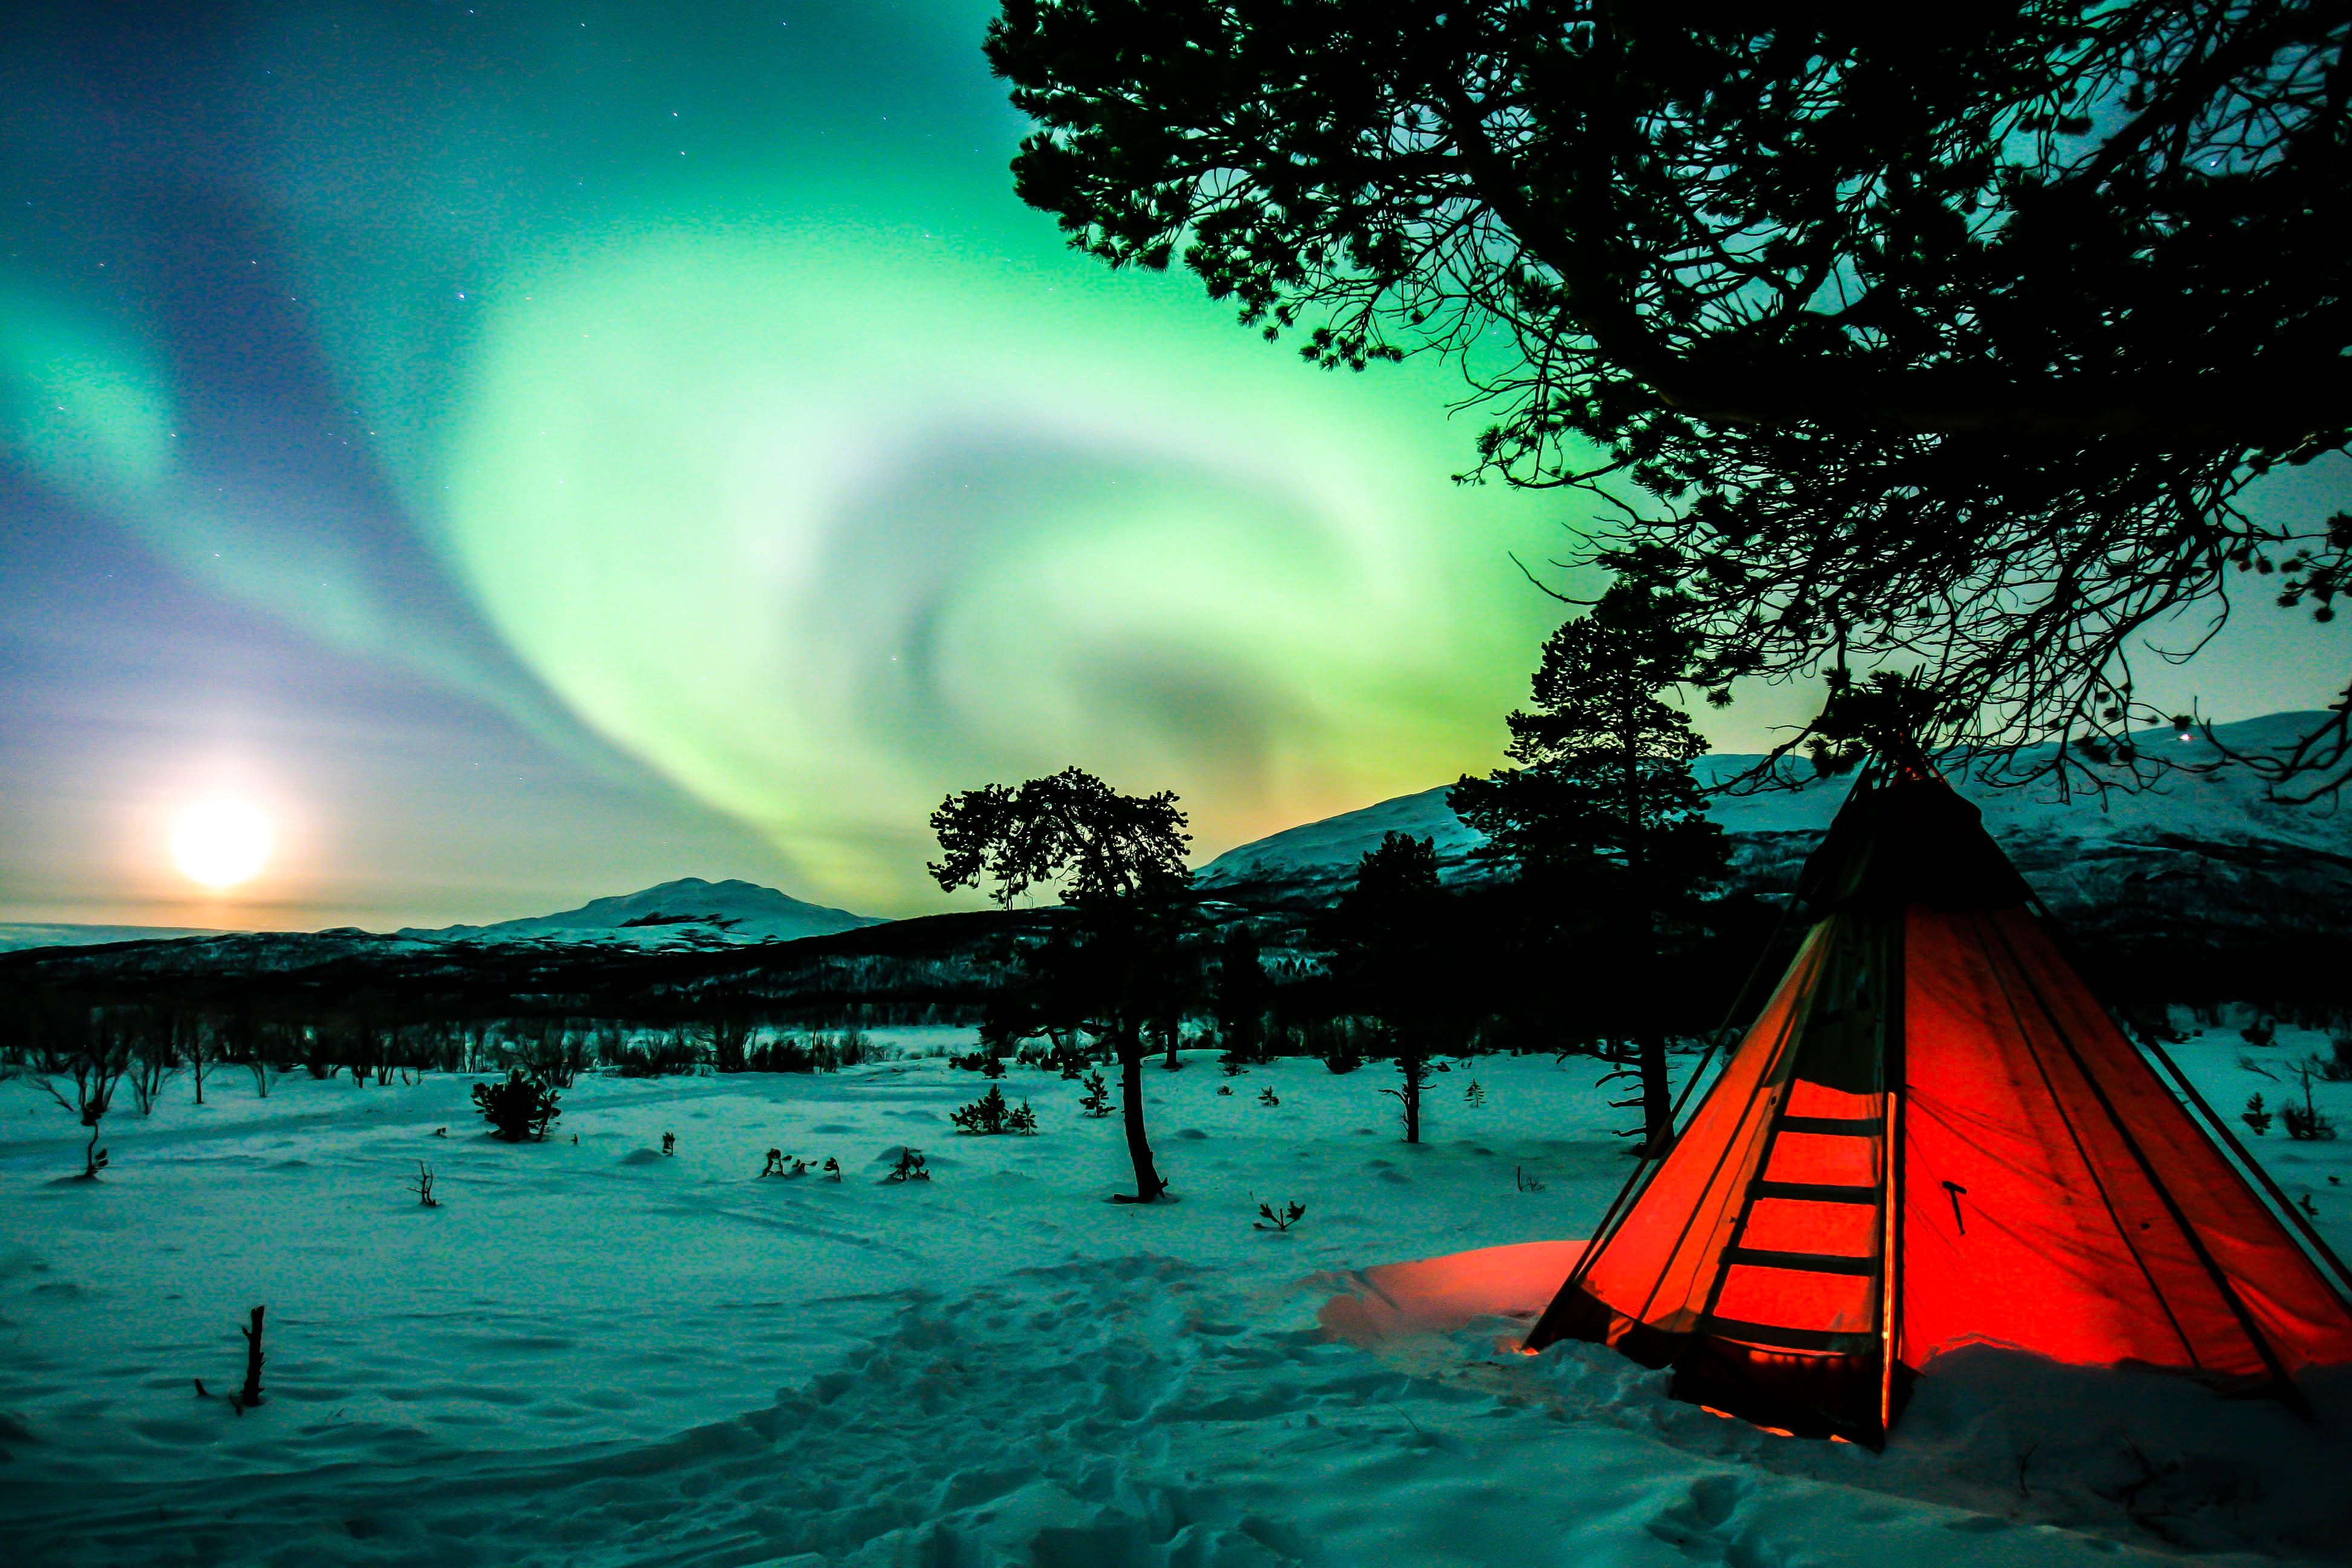 Northern lights in Abisko, Sweden - photo by Dylan Shaw